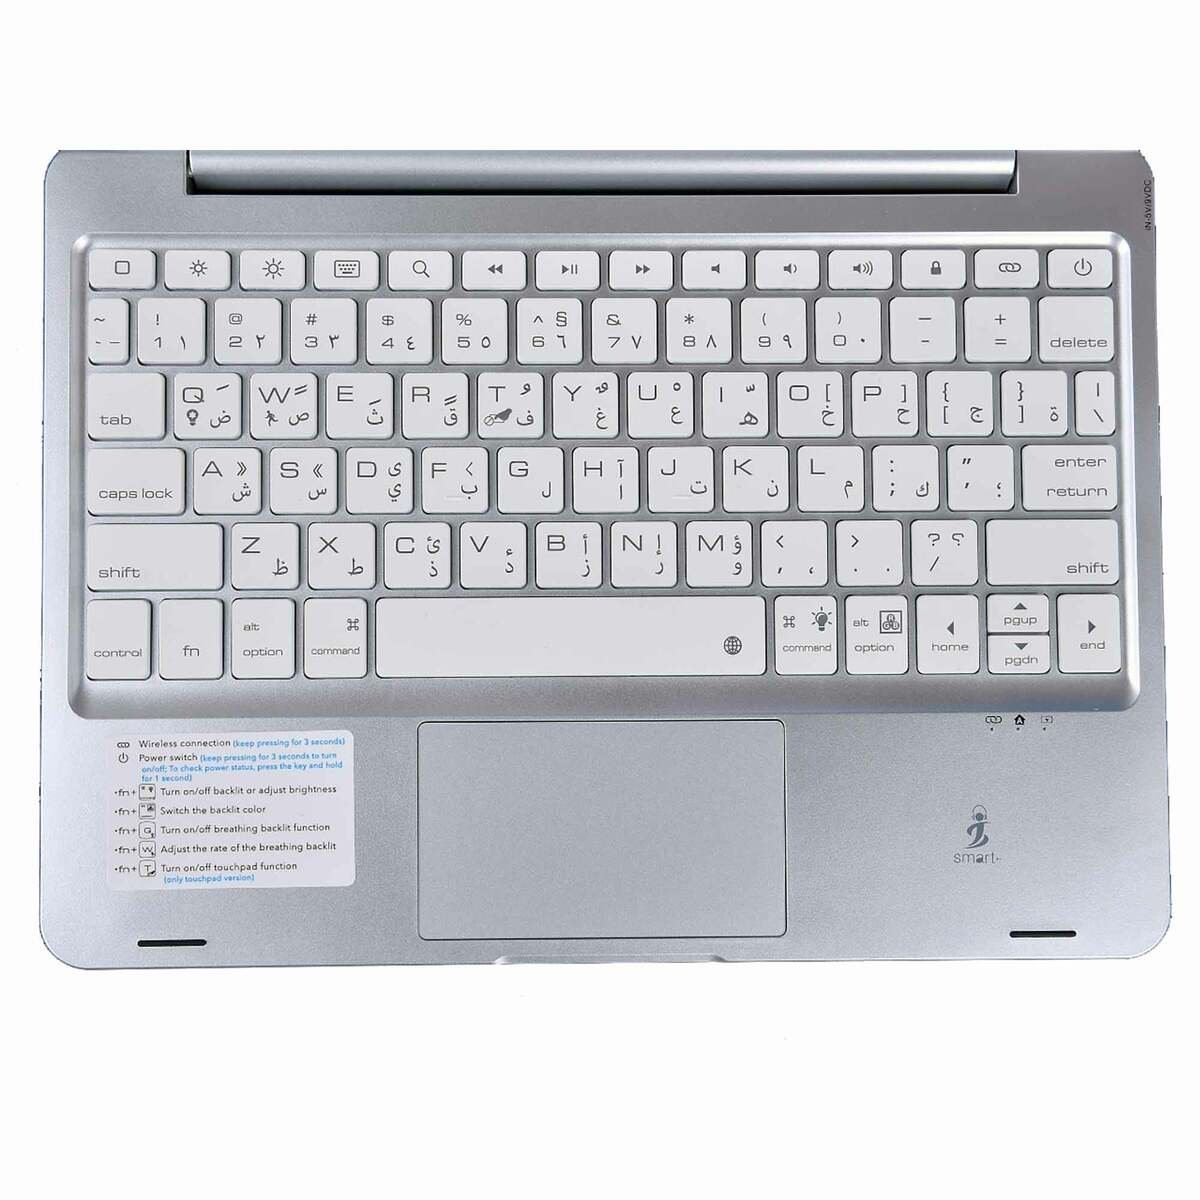 Smart Wireless Backlit Keyboard with Trackpad For iPad 10.2inch English/Arabic Key ACIPD10